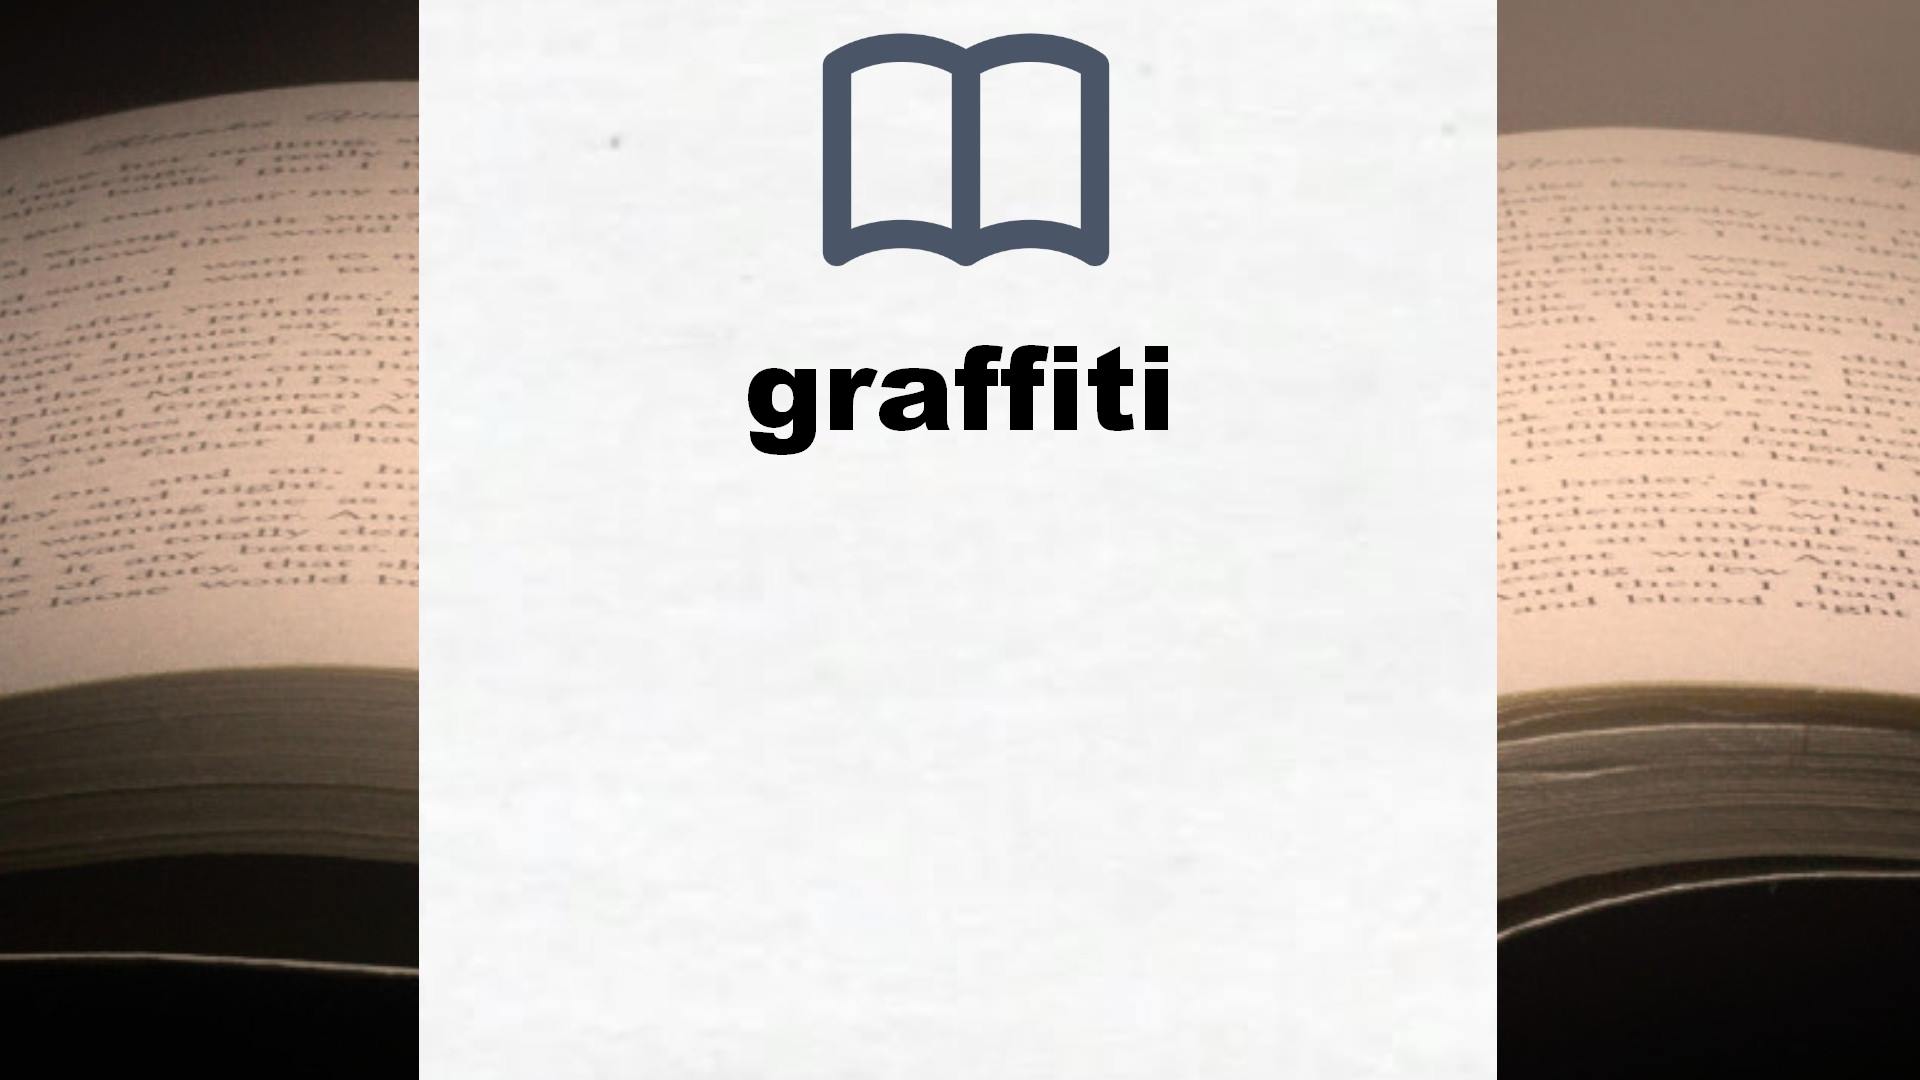 Libros sobre graffiti